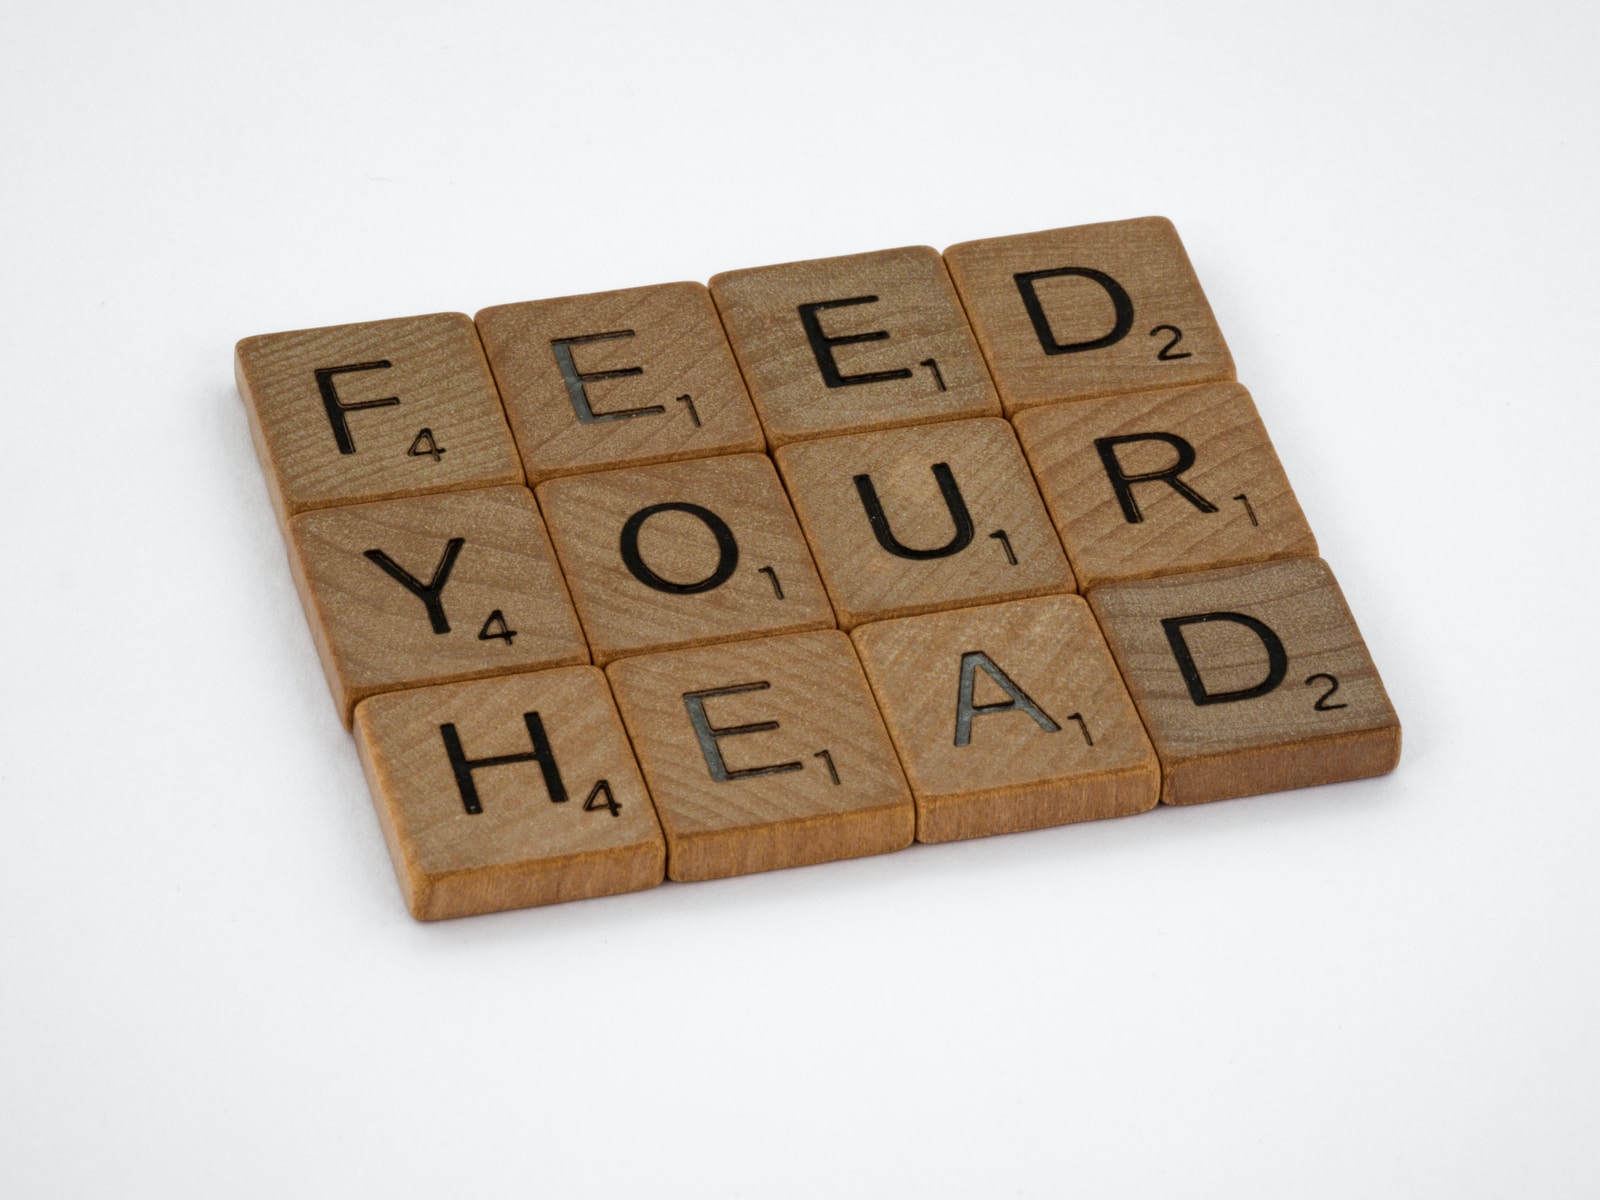 Scrabble tiles spelling Feed Your Head